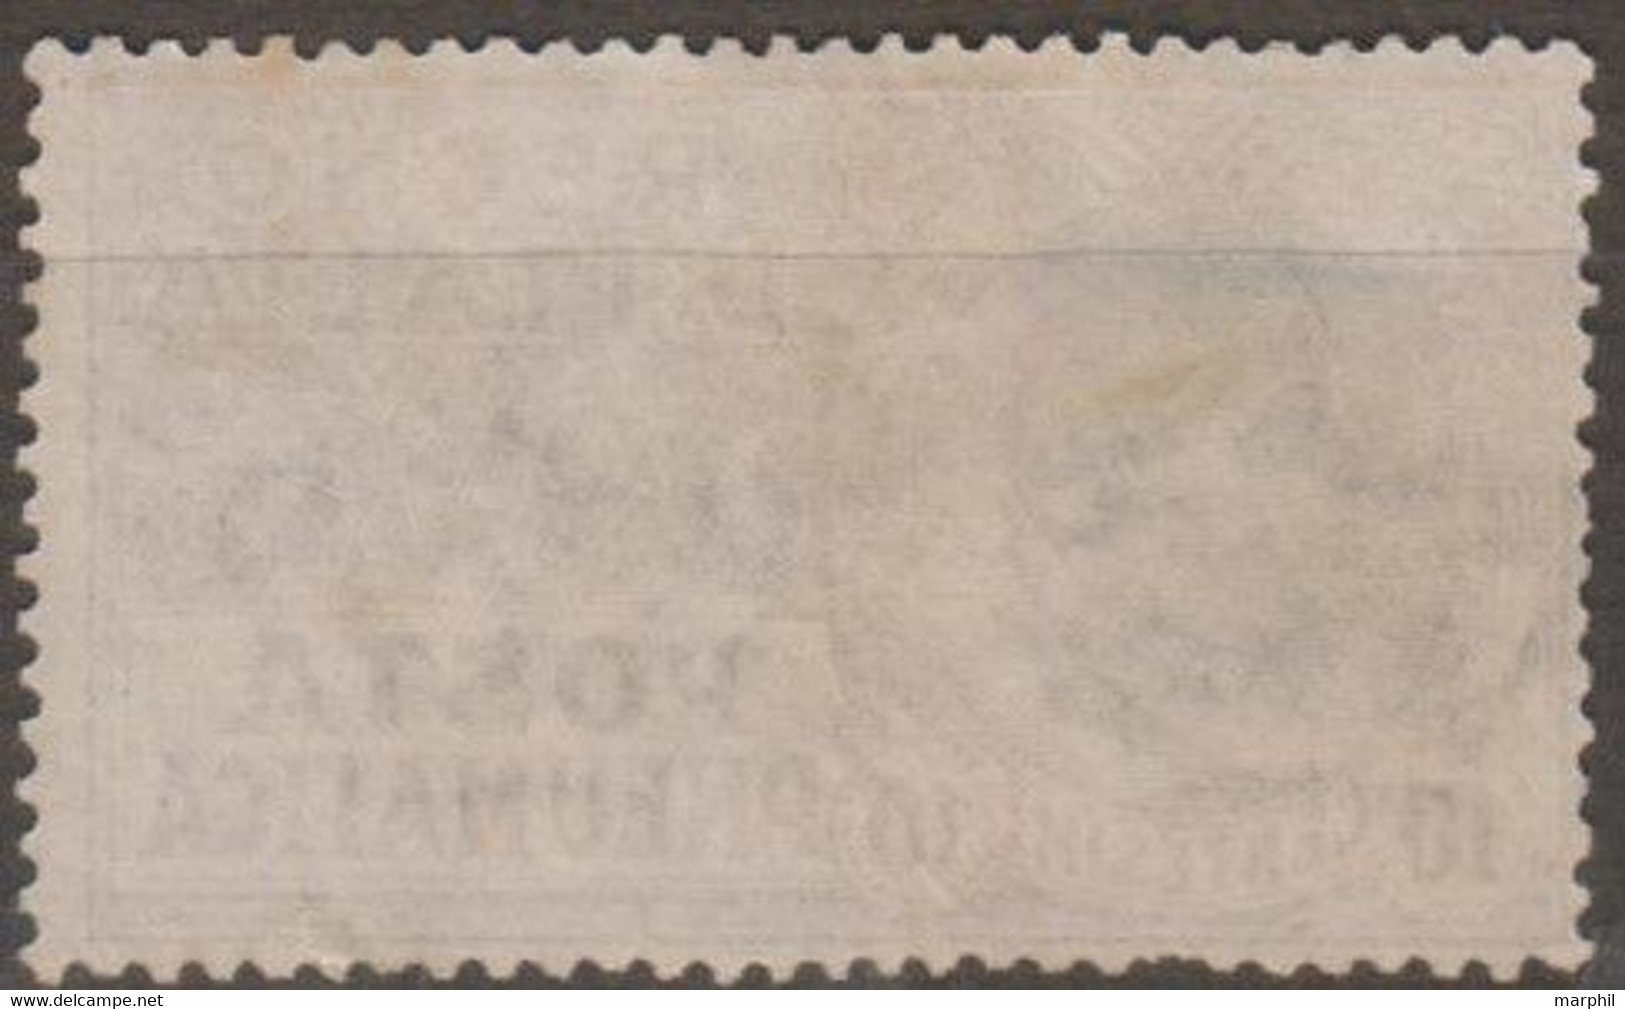 Italia 1913 Posta Pneumatica UnN°PN1 (*) No Gum Vedere Scansione - Poste Pneumatique